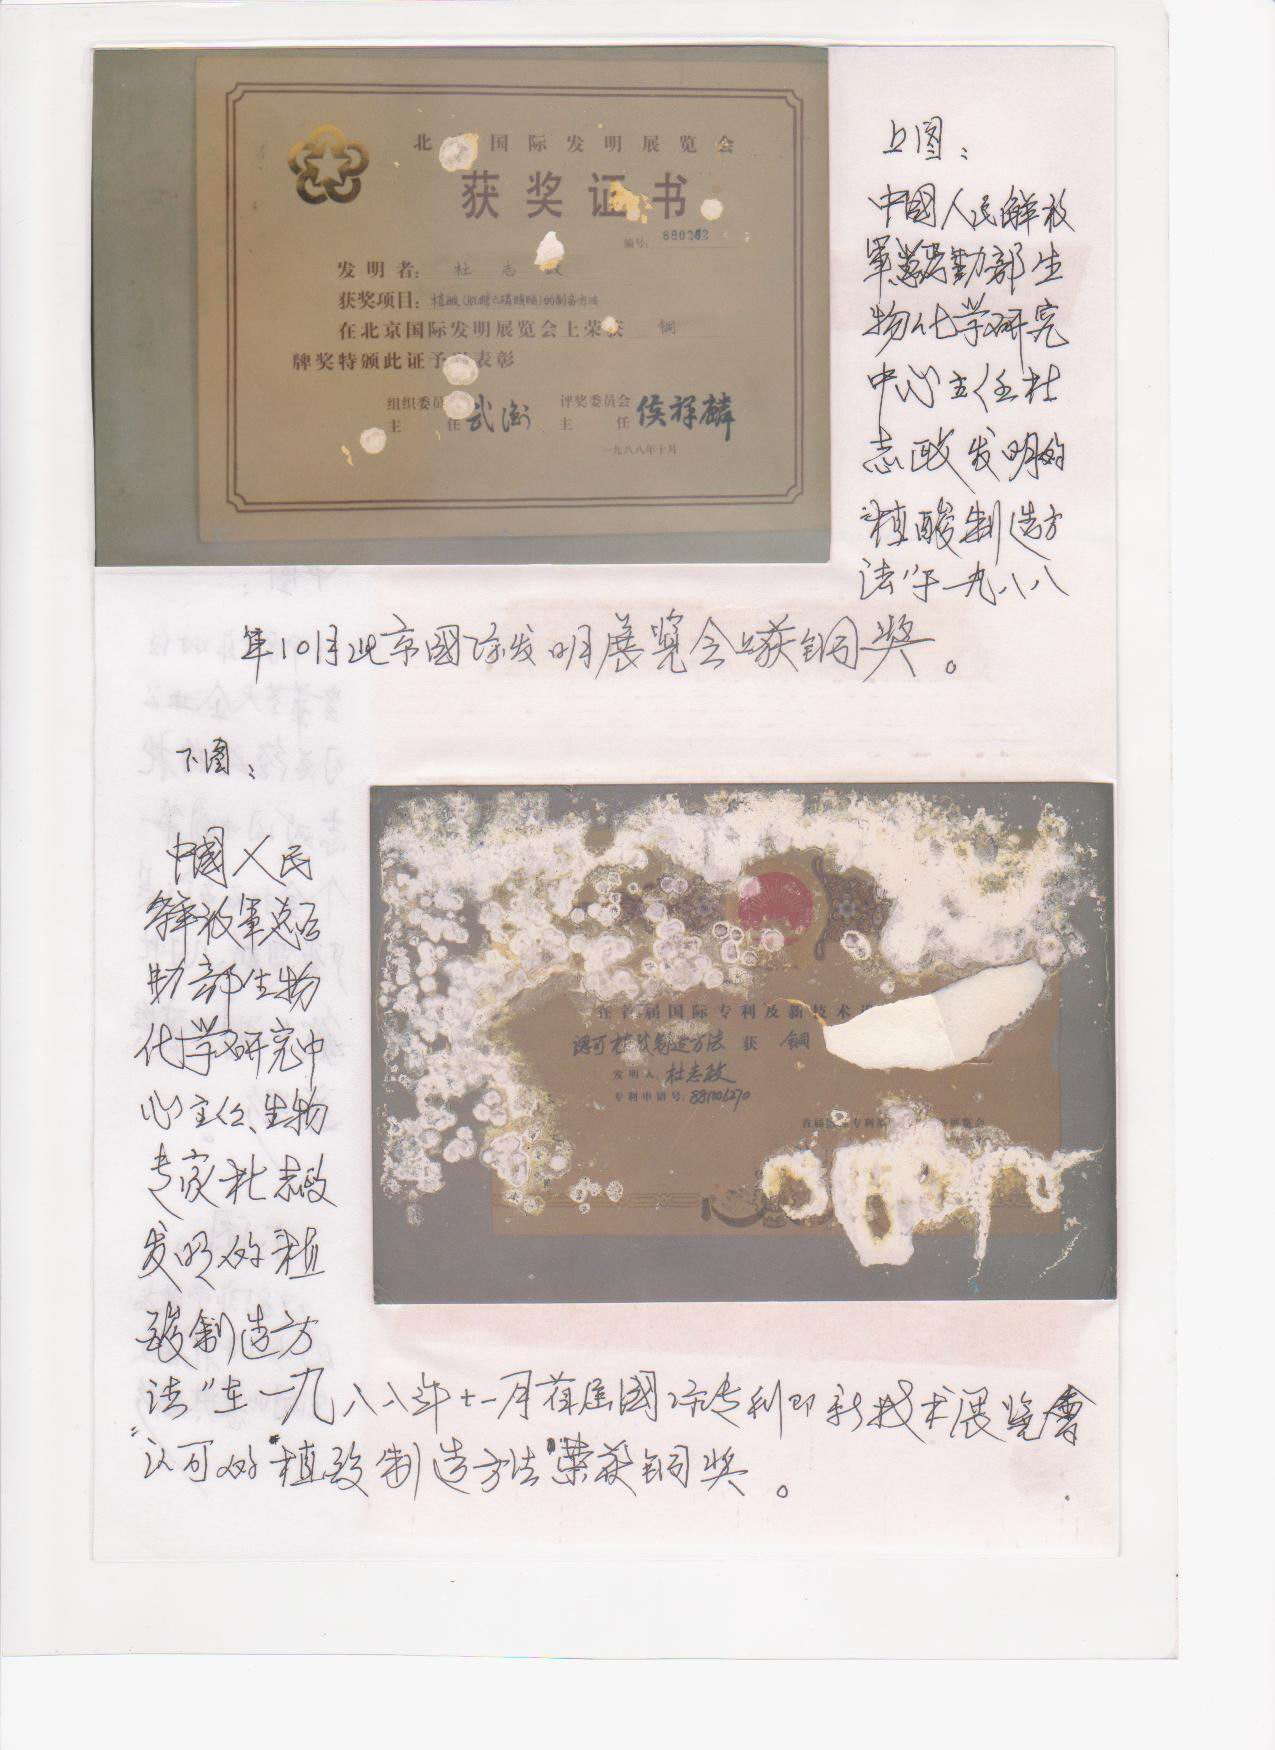 Du Zhizheng won the Bronze Award at the 1988 Beijing International Invention Exhibition